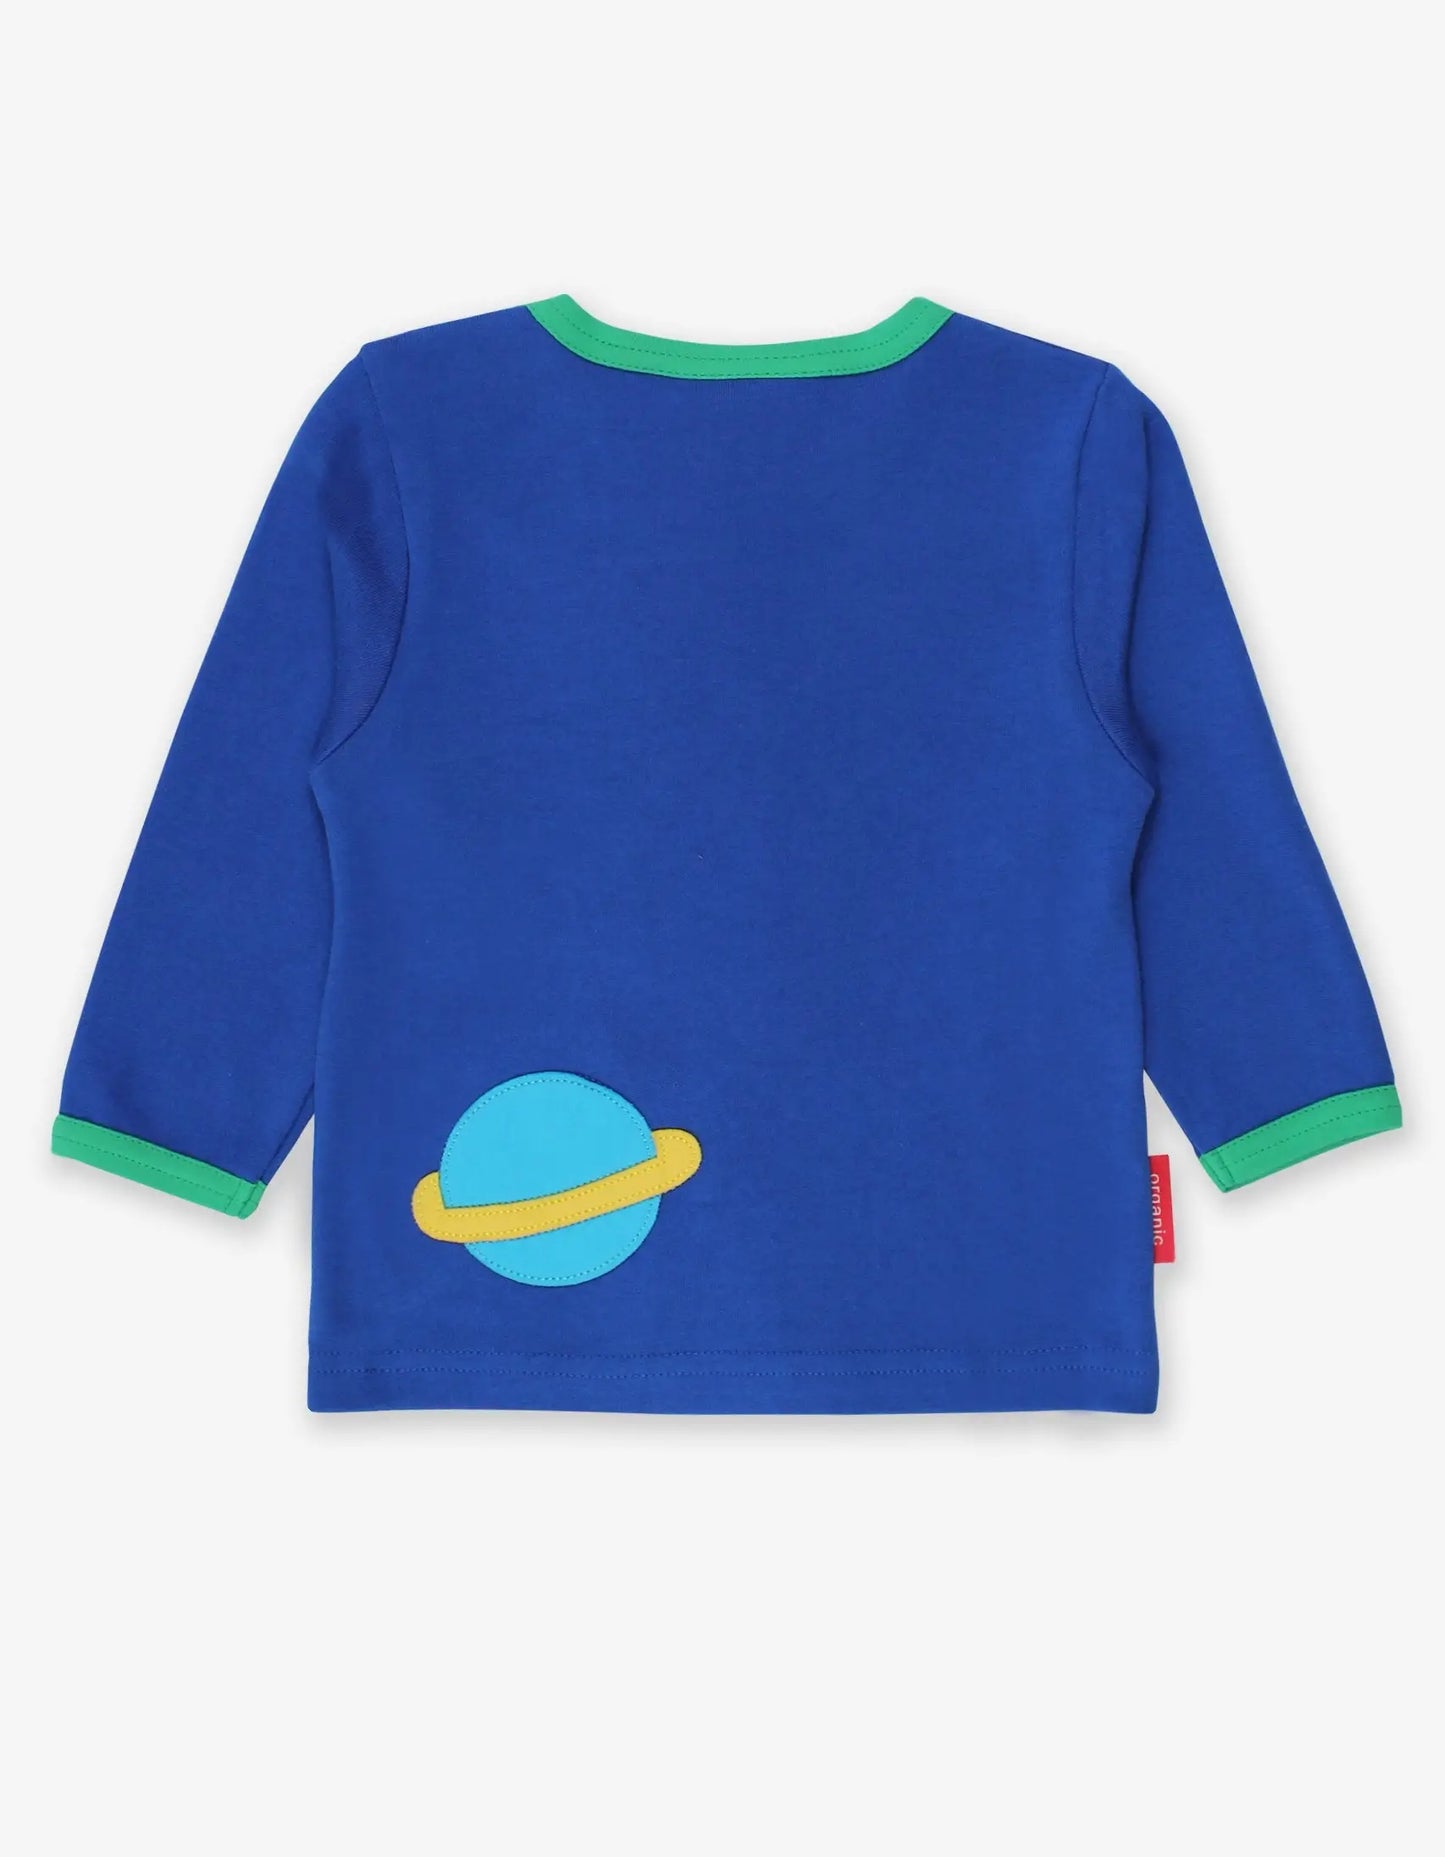 Organic Rocket Planet Applique Shirt